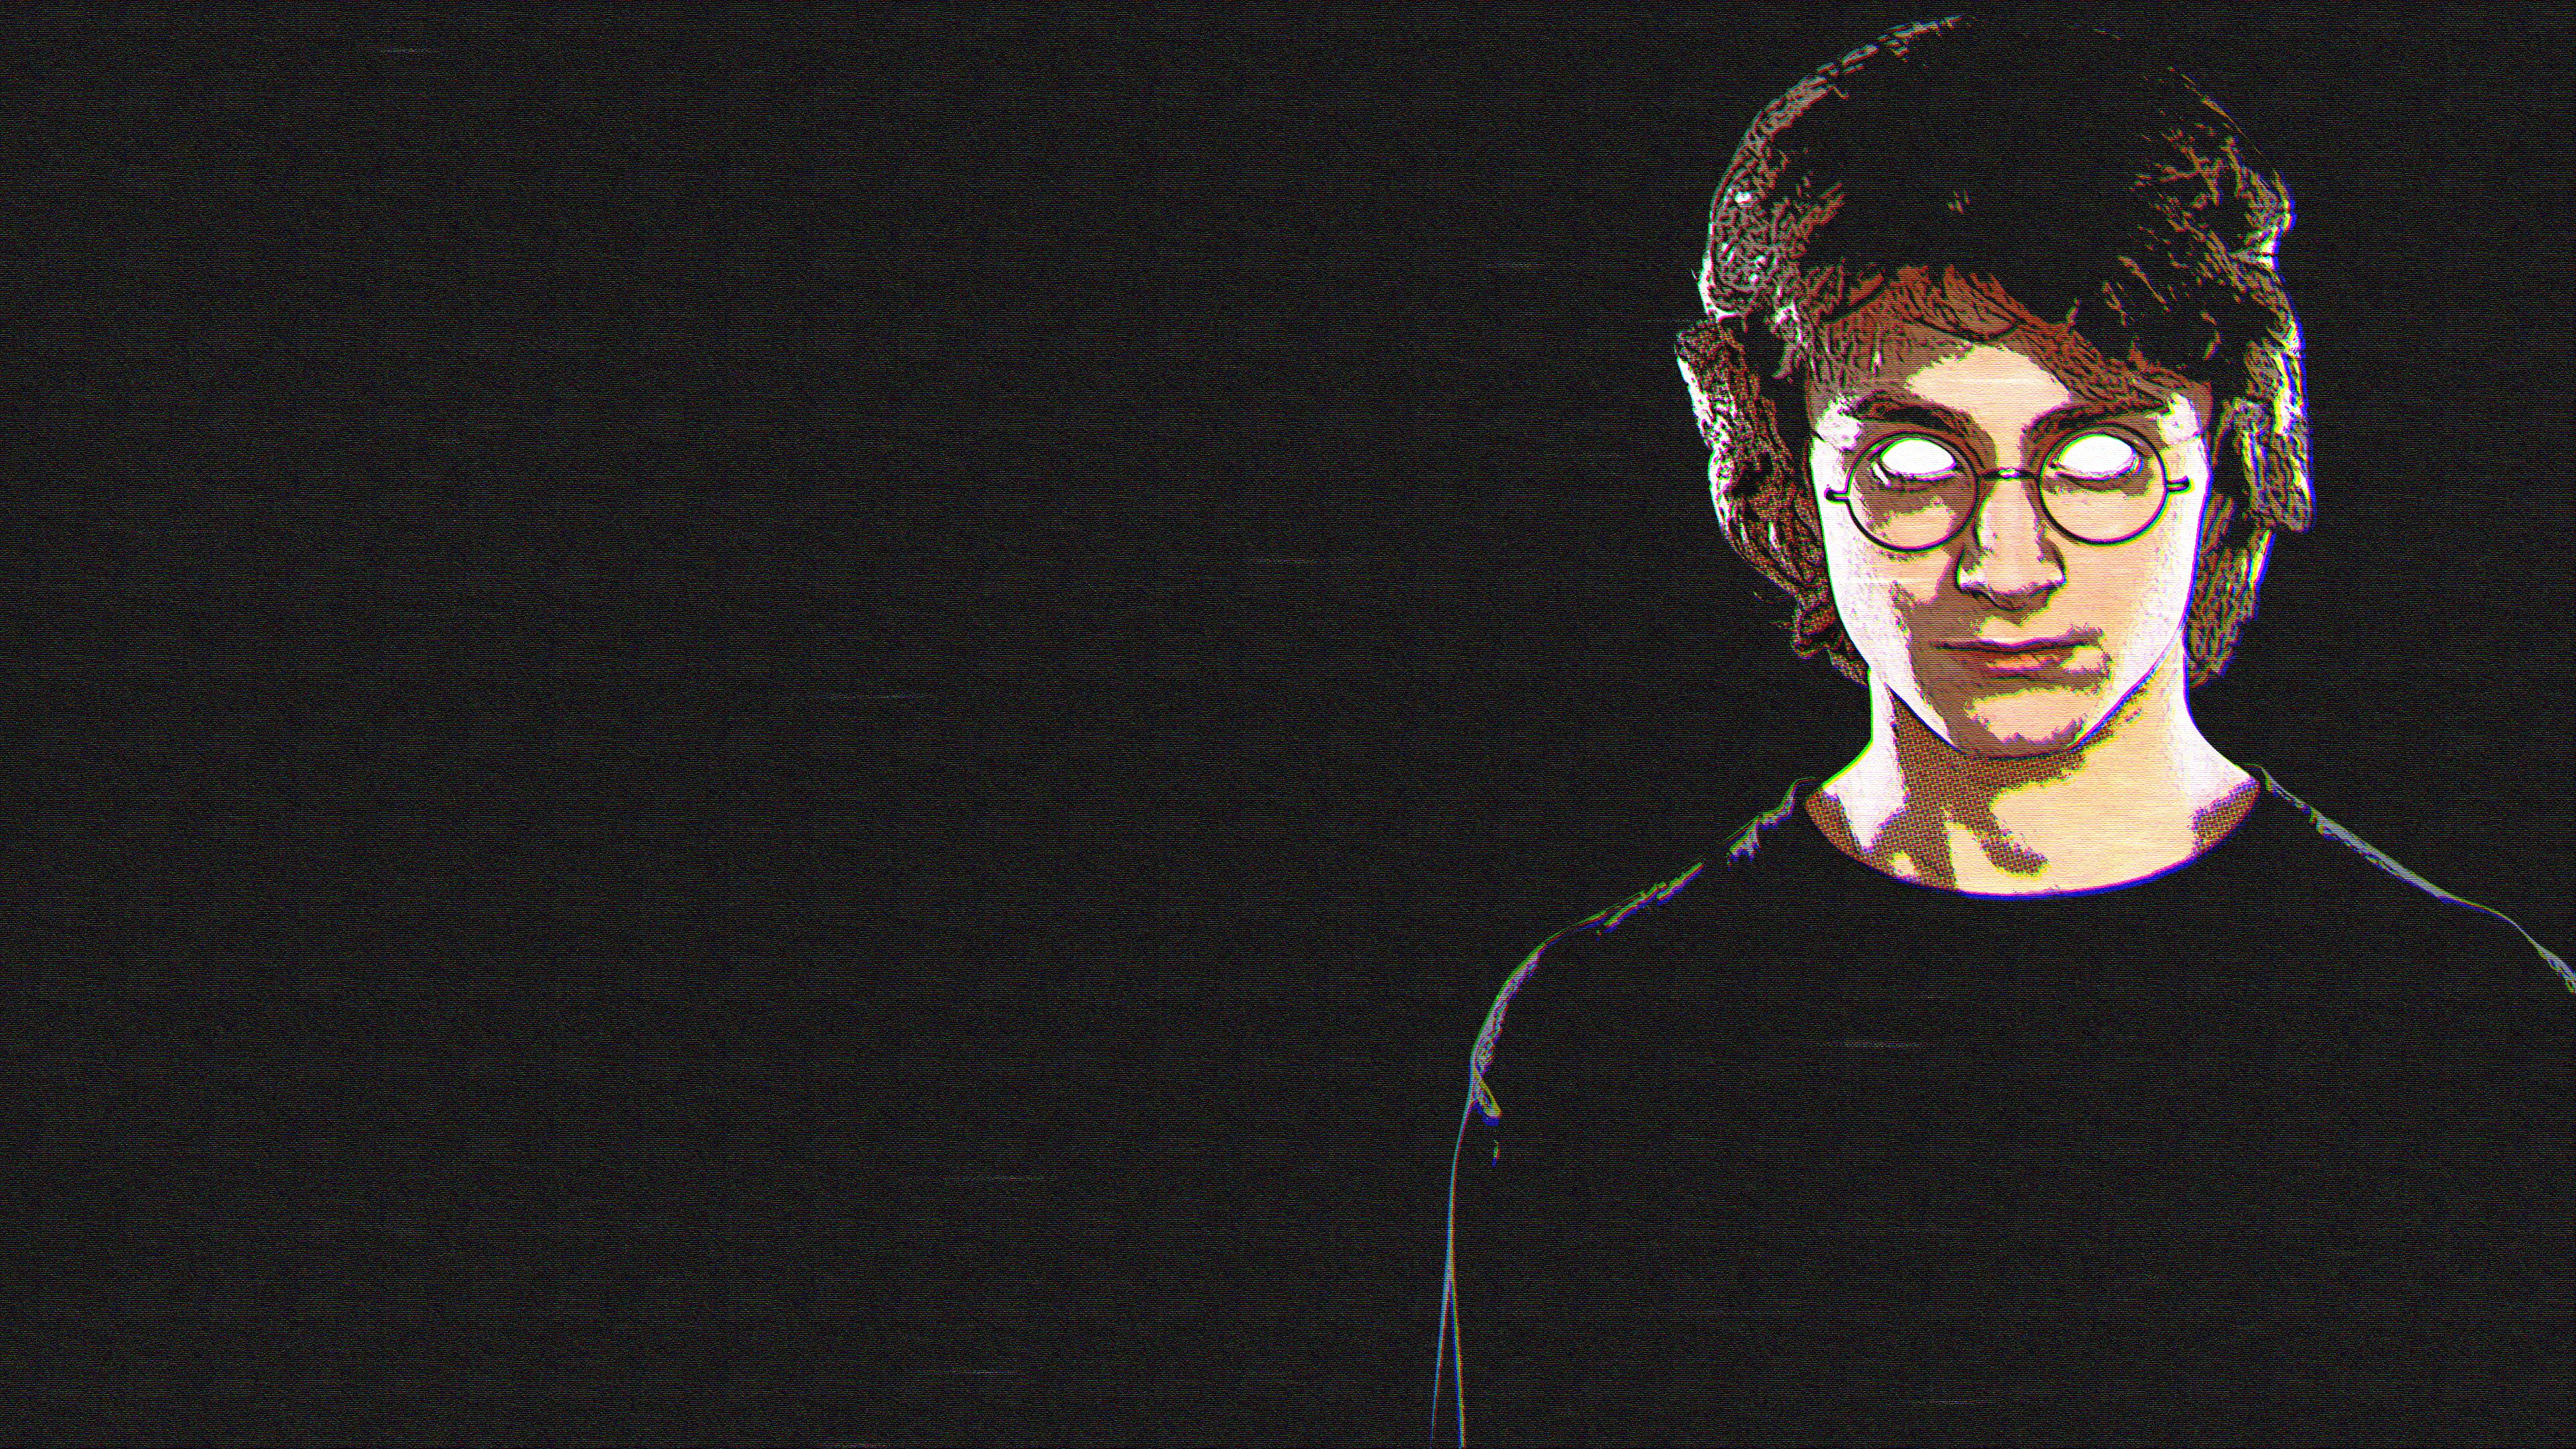 Harry Potter 4K Ultra HD Wallpapers on WallpaperDog